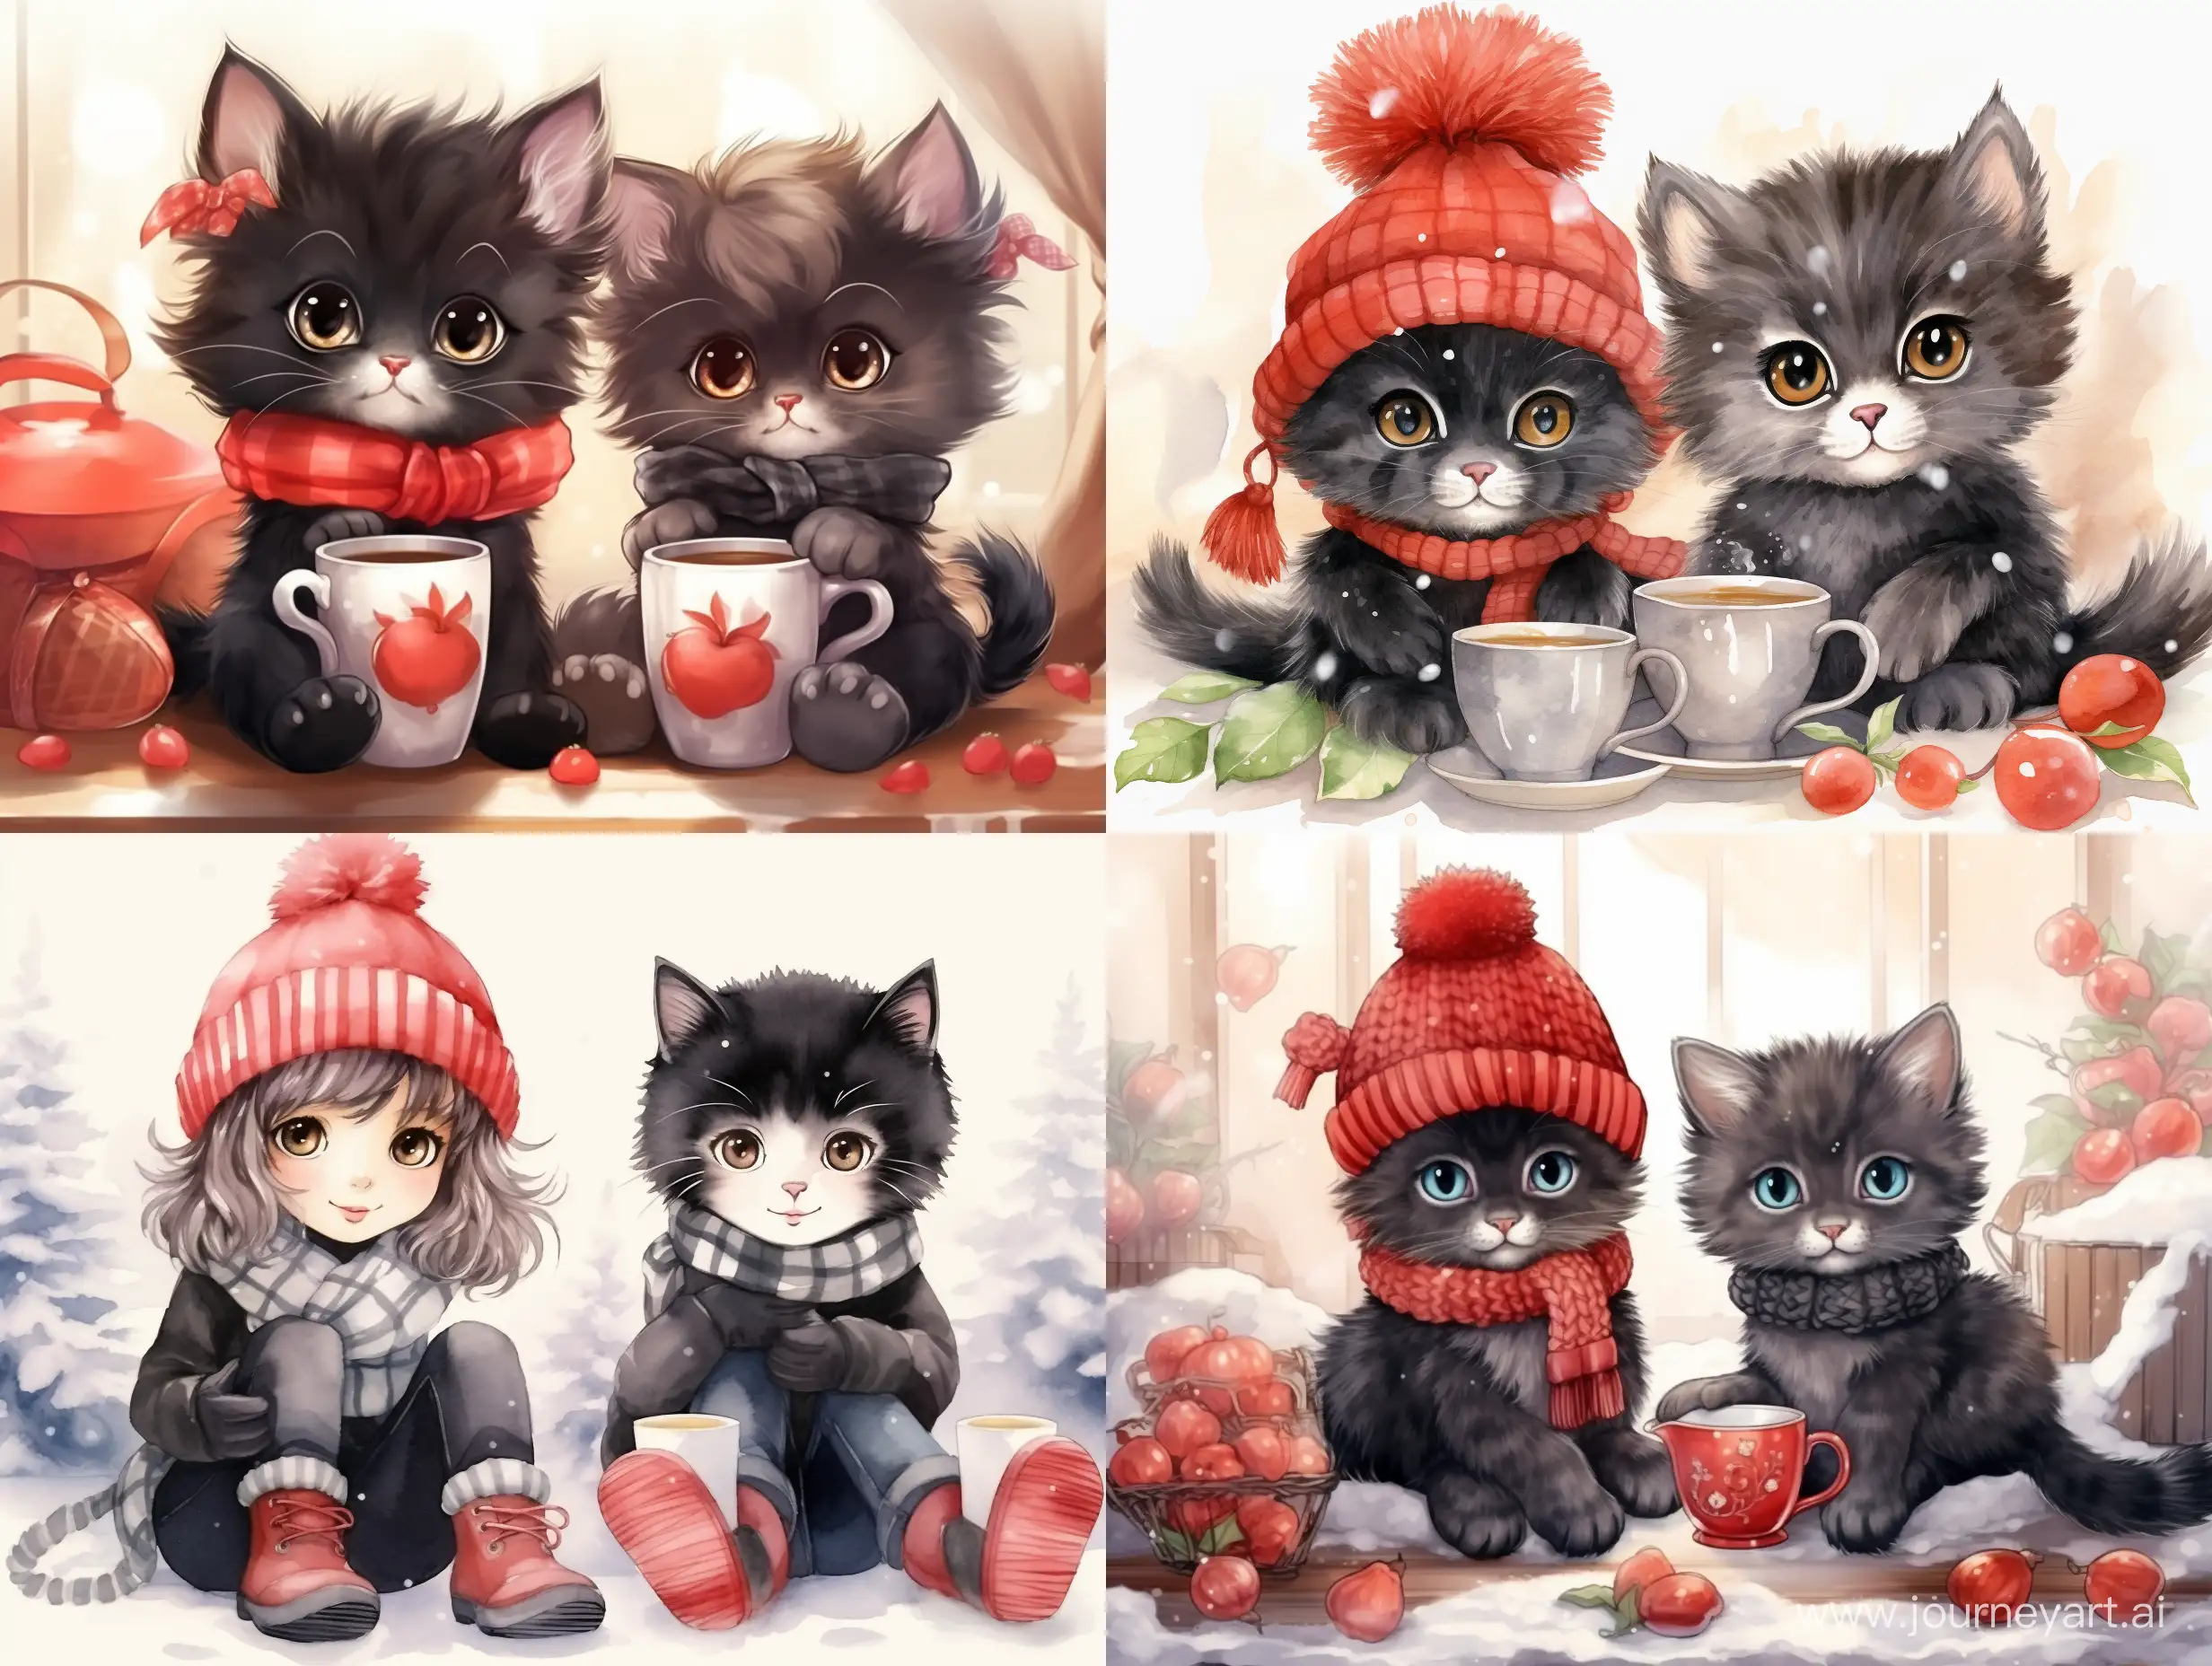 Adorable-Black-Kittens-in-Winter-Wonderland-with-Tea